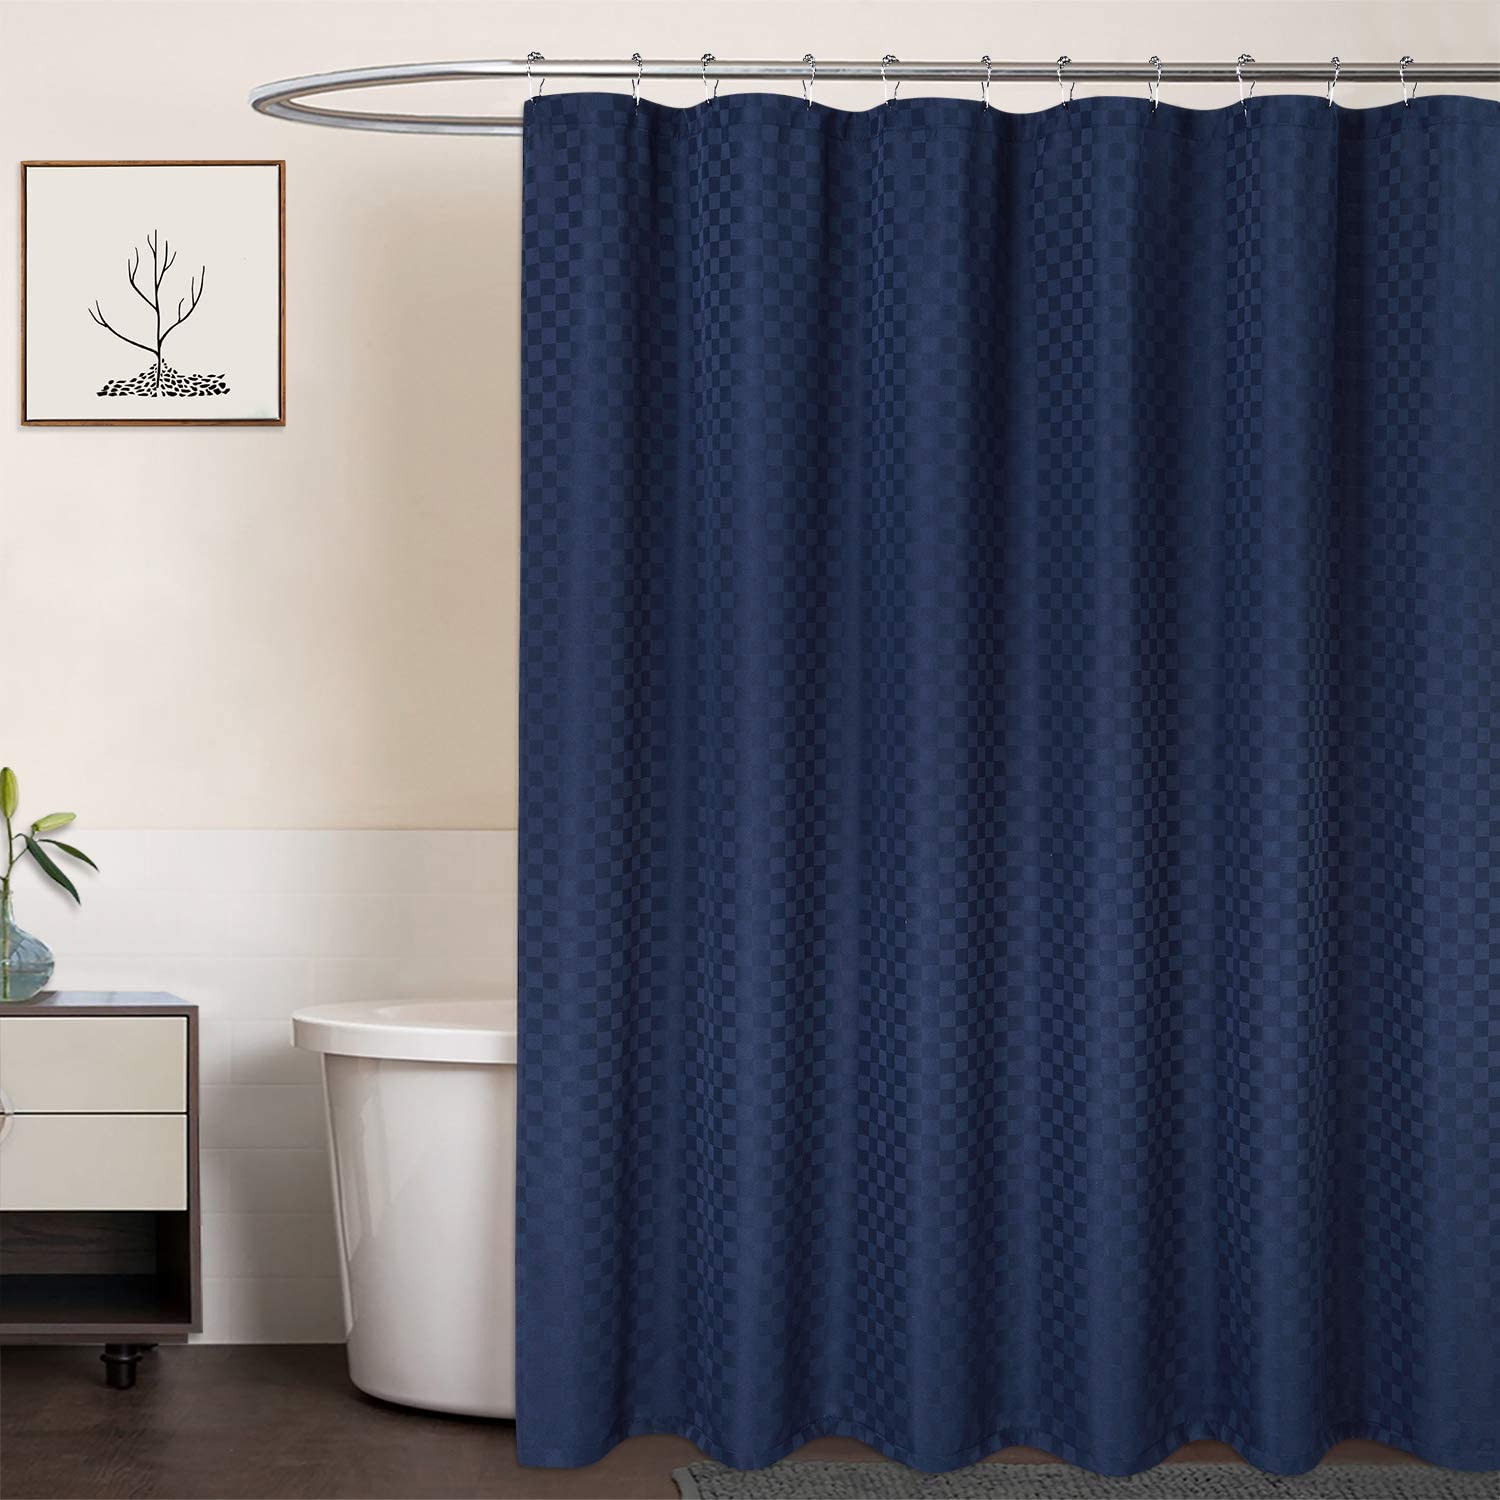 Caromio Extra Long Shower Curtain 96 Inches Length Hotel Luxury 190gsm Heavy We Ebay 2243